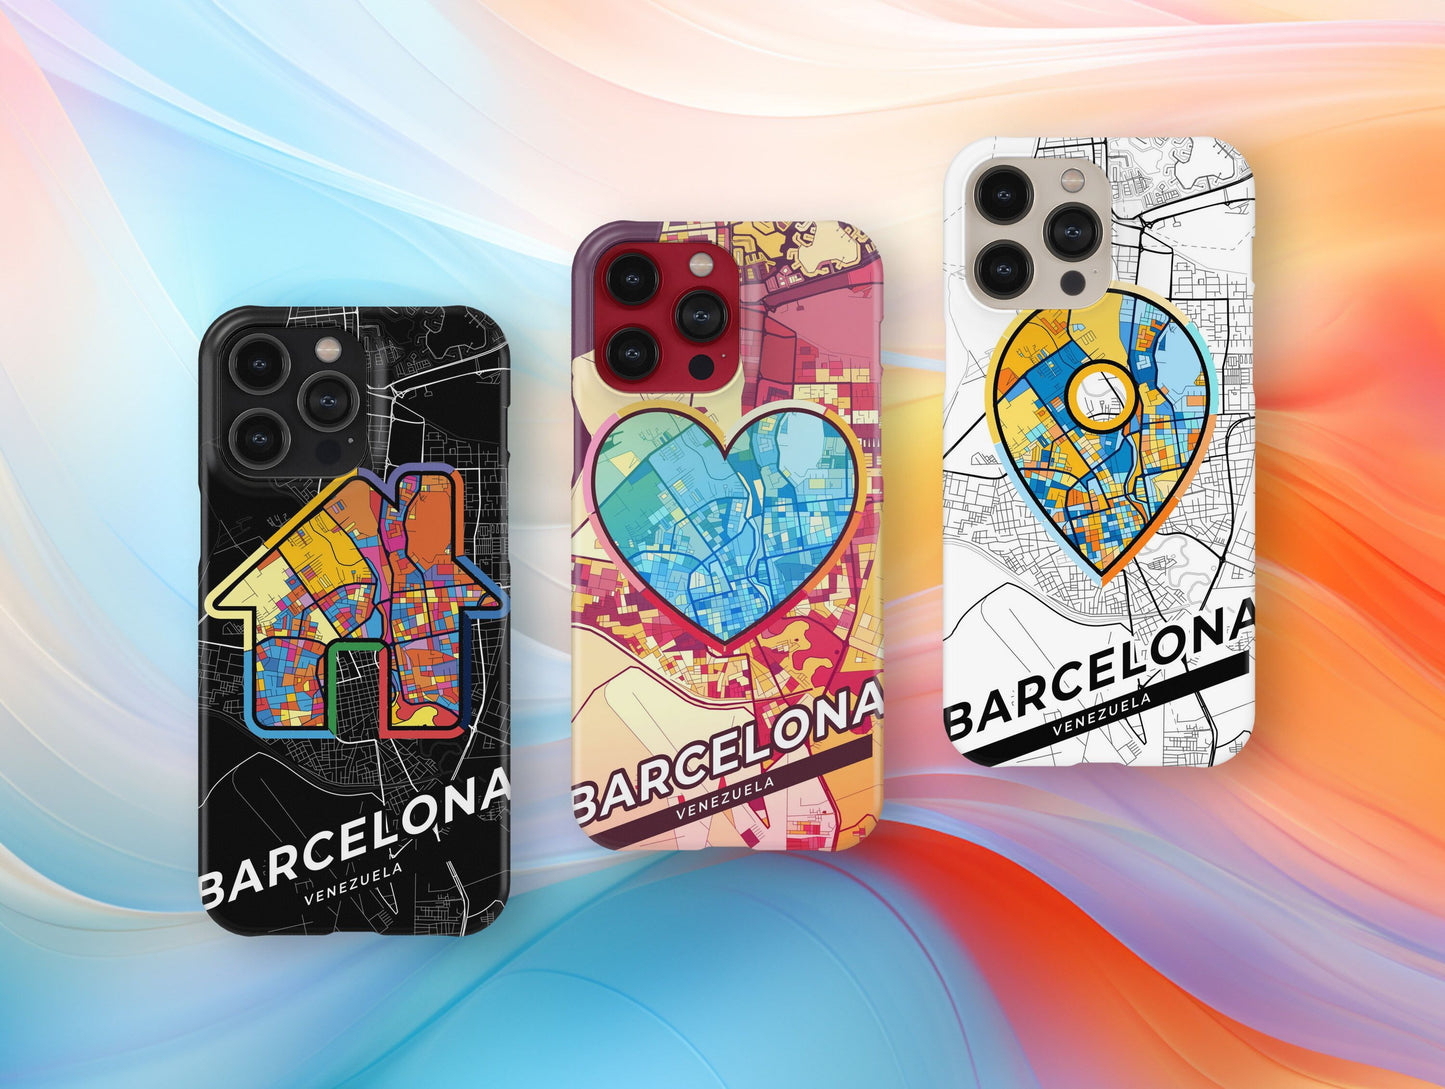 Barcelona Venezuela slim phone case with colorful icon. Birthday, wedding or housewarming gift. Couple match cases.